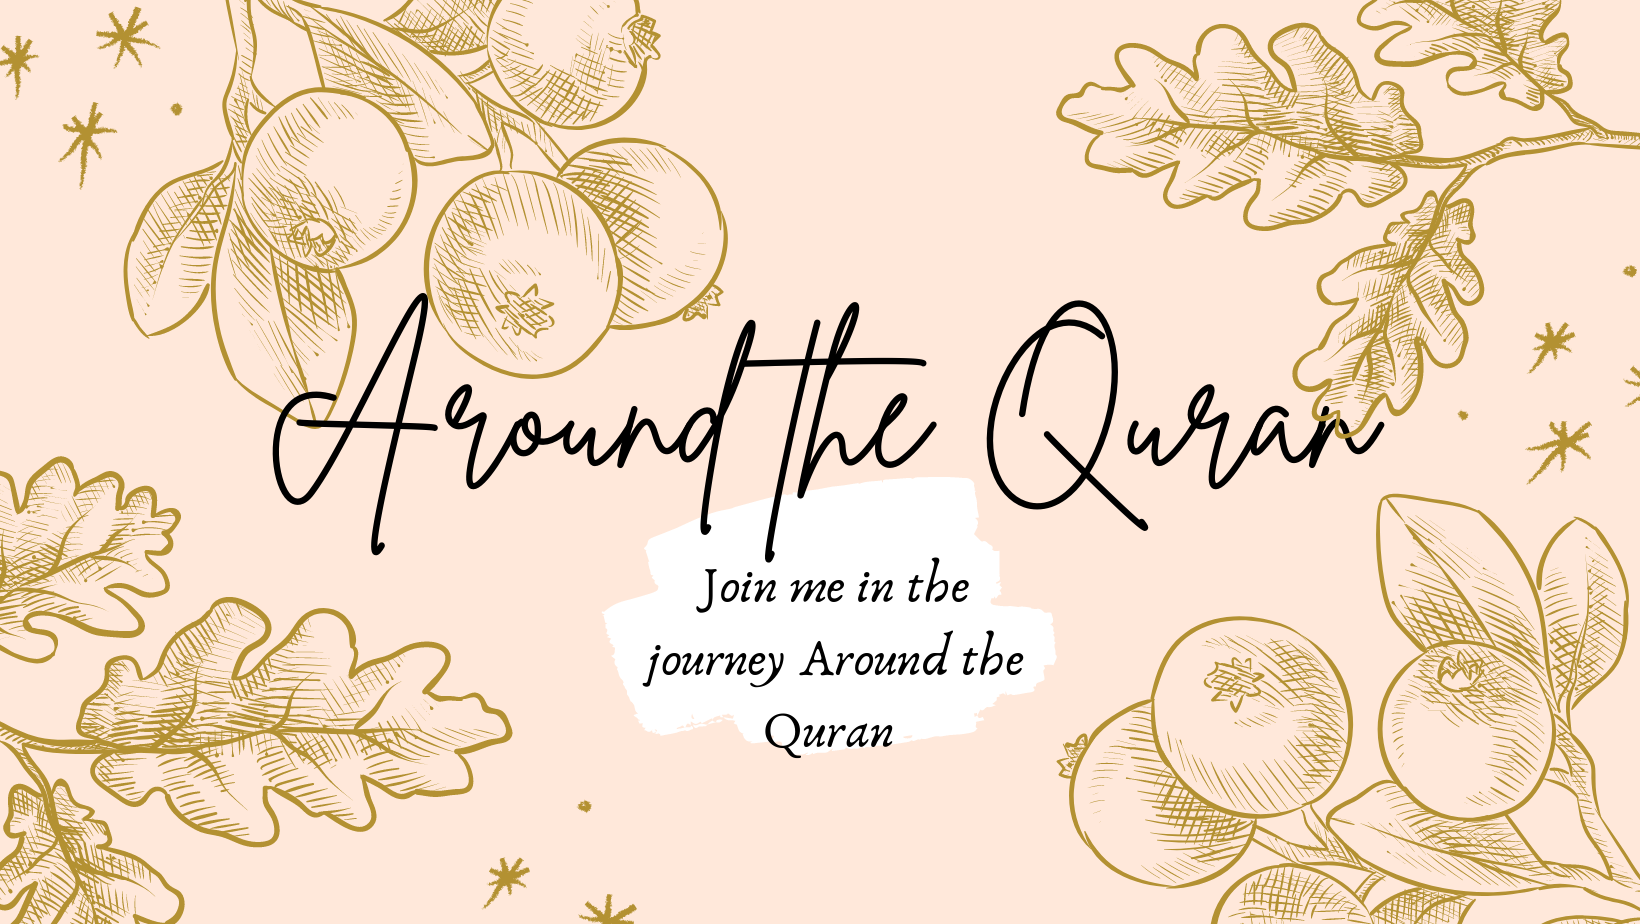 Around the Quran Grade 5